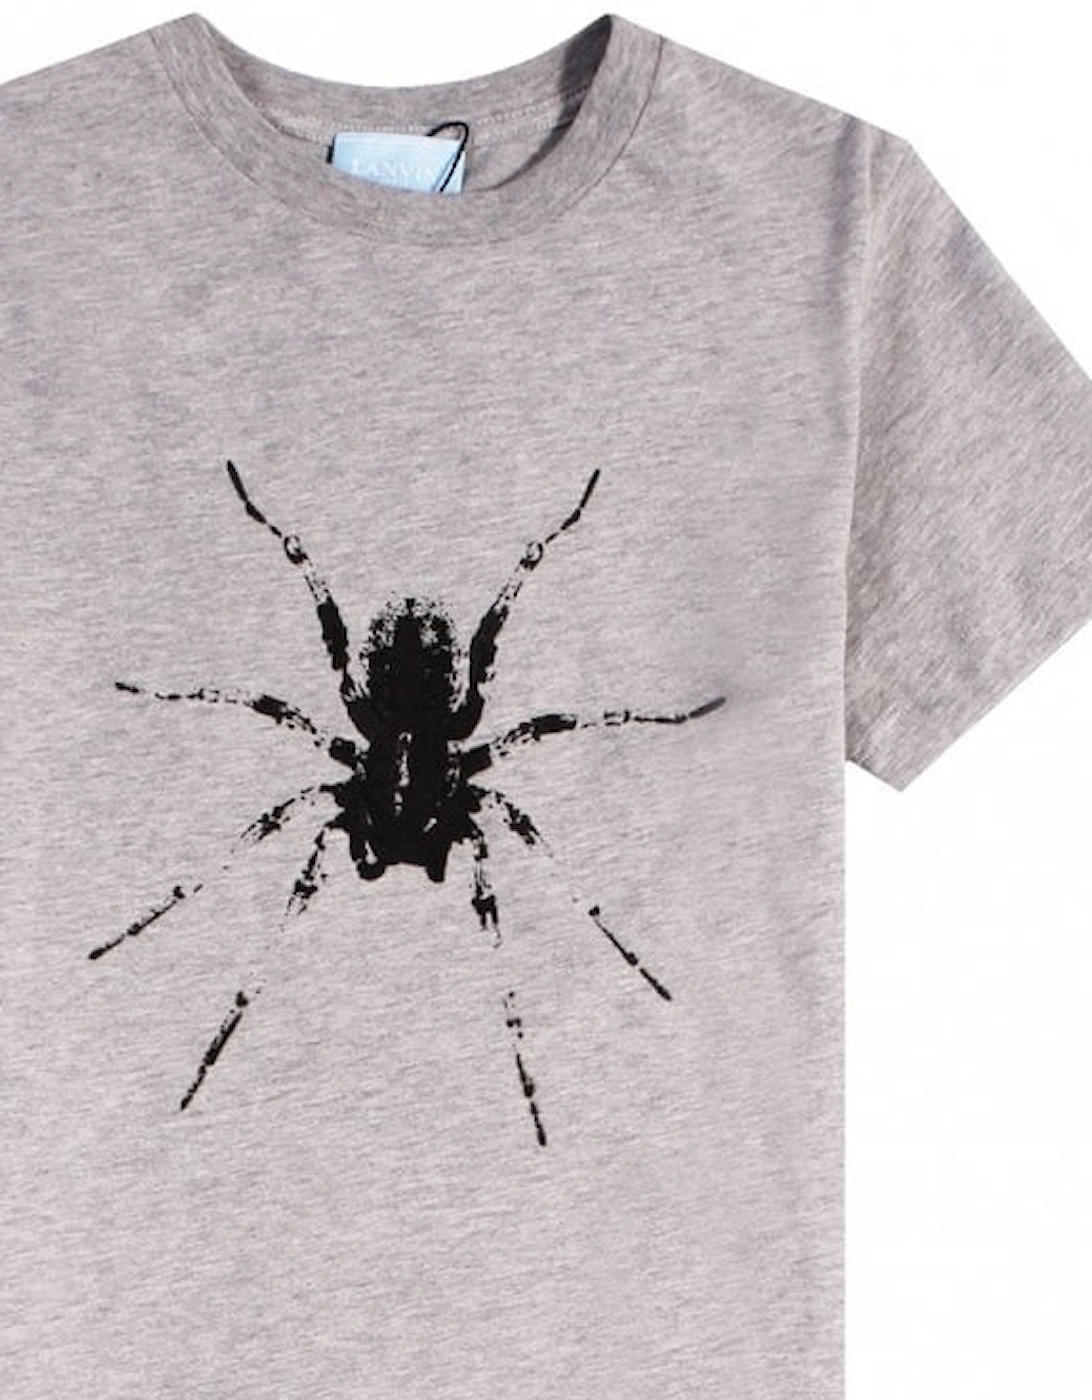 Boys Spider Logo T-Shirt Grey